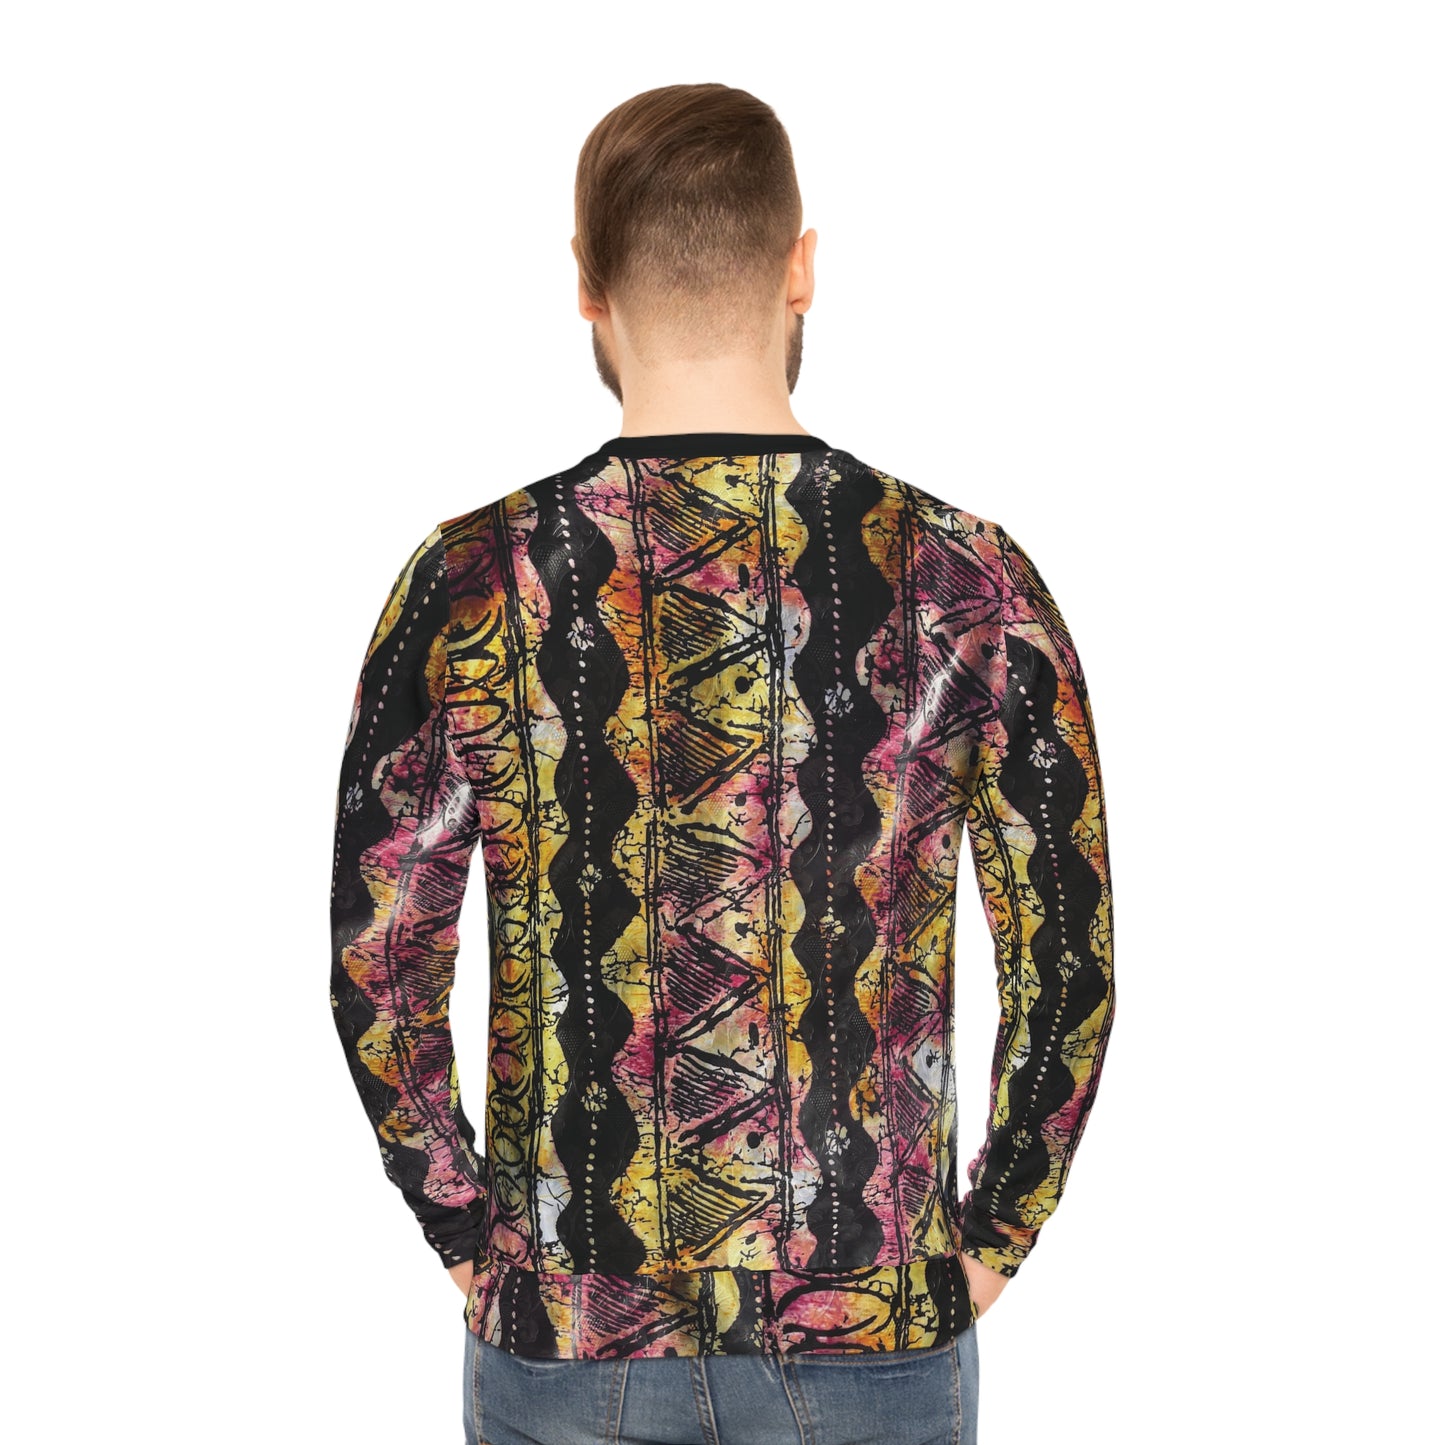 Batik 'Central' Lightweight Sweatshirt